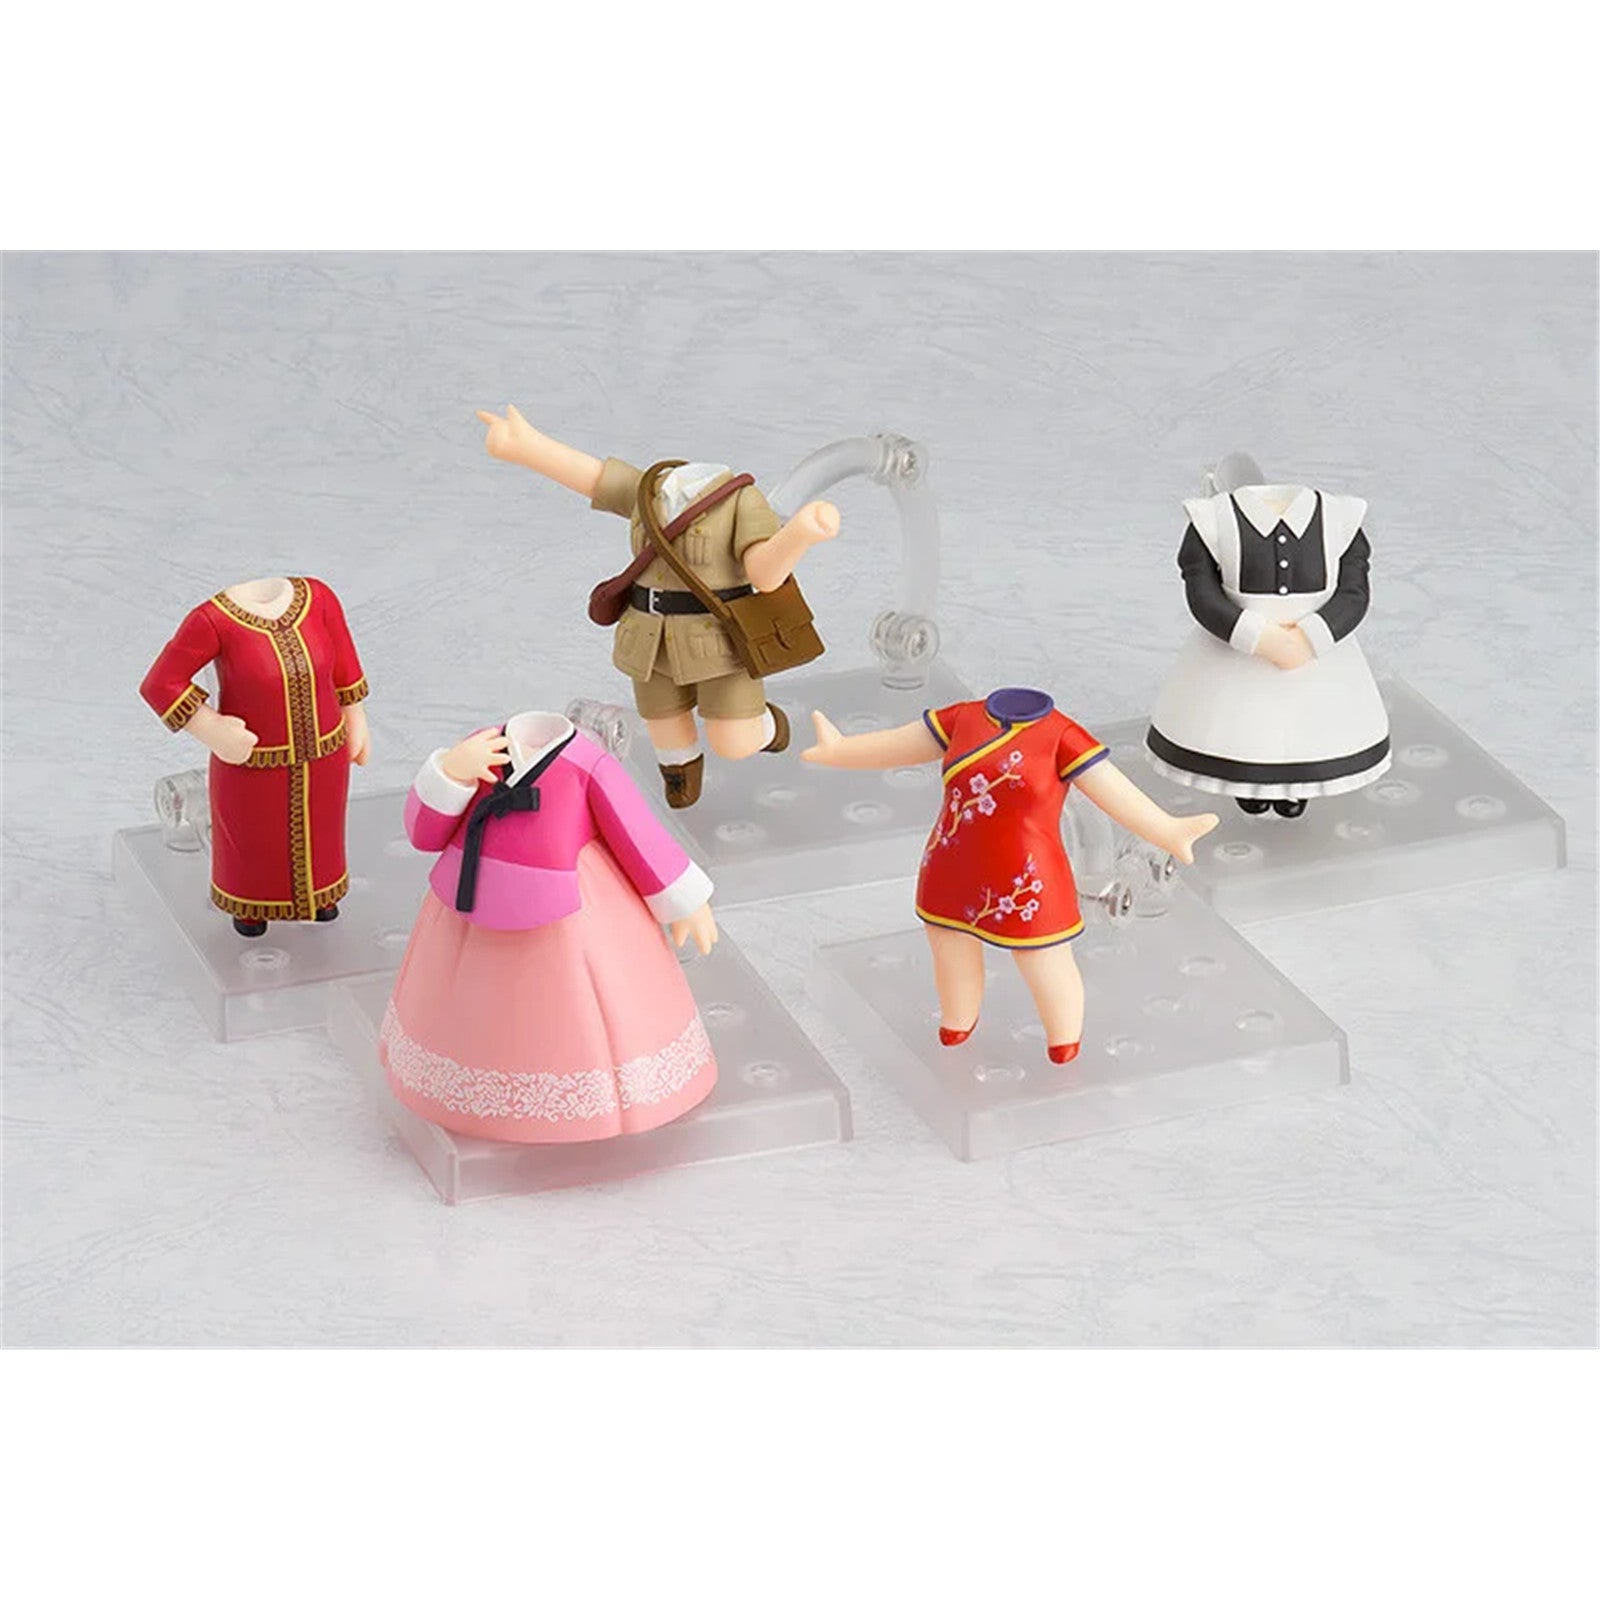 Good Smile Company Nendoroid More: Love Live! Sunshine! Dress Up World Image Girls Vol.1 Trading Figure Set of 5